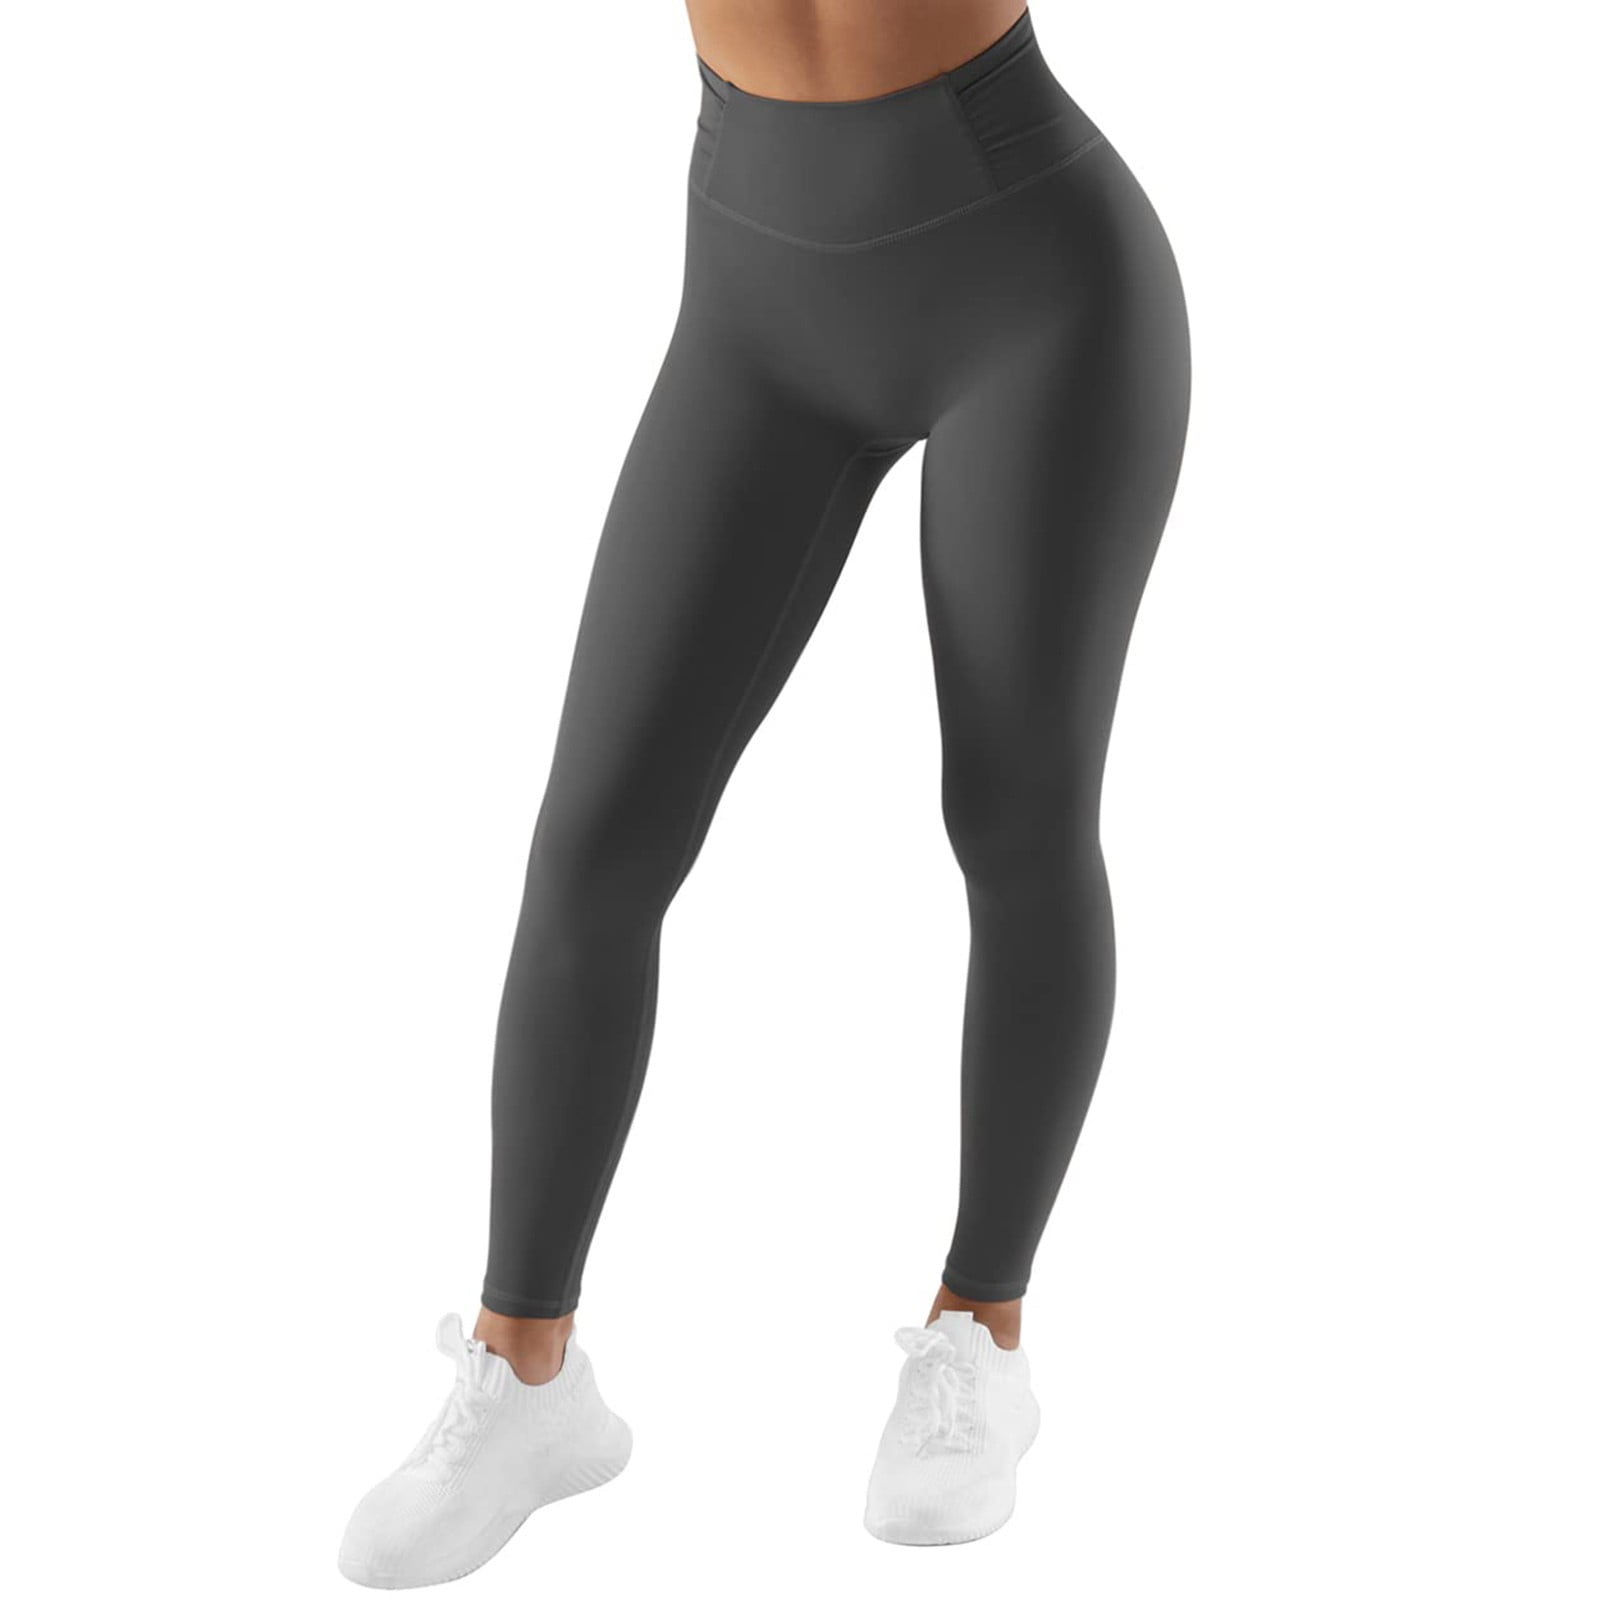 Deago Women's 3D Print Athletic Yoga Pants Skinny Workout Gym Leggings  Sport Trousers Breathable 